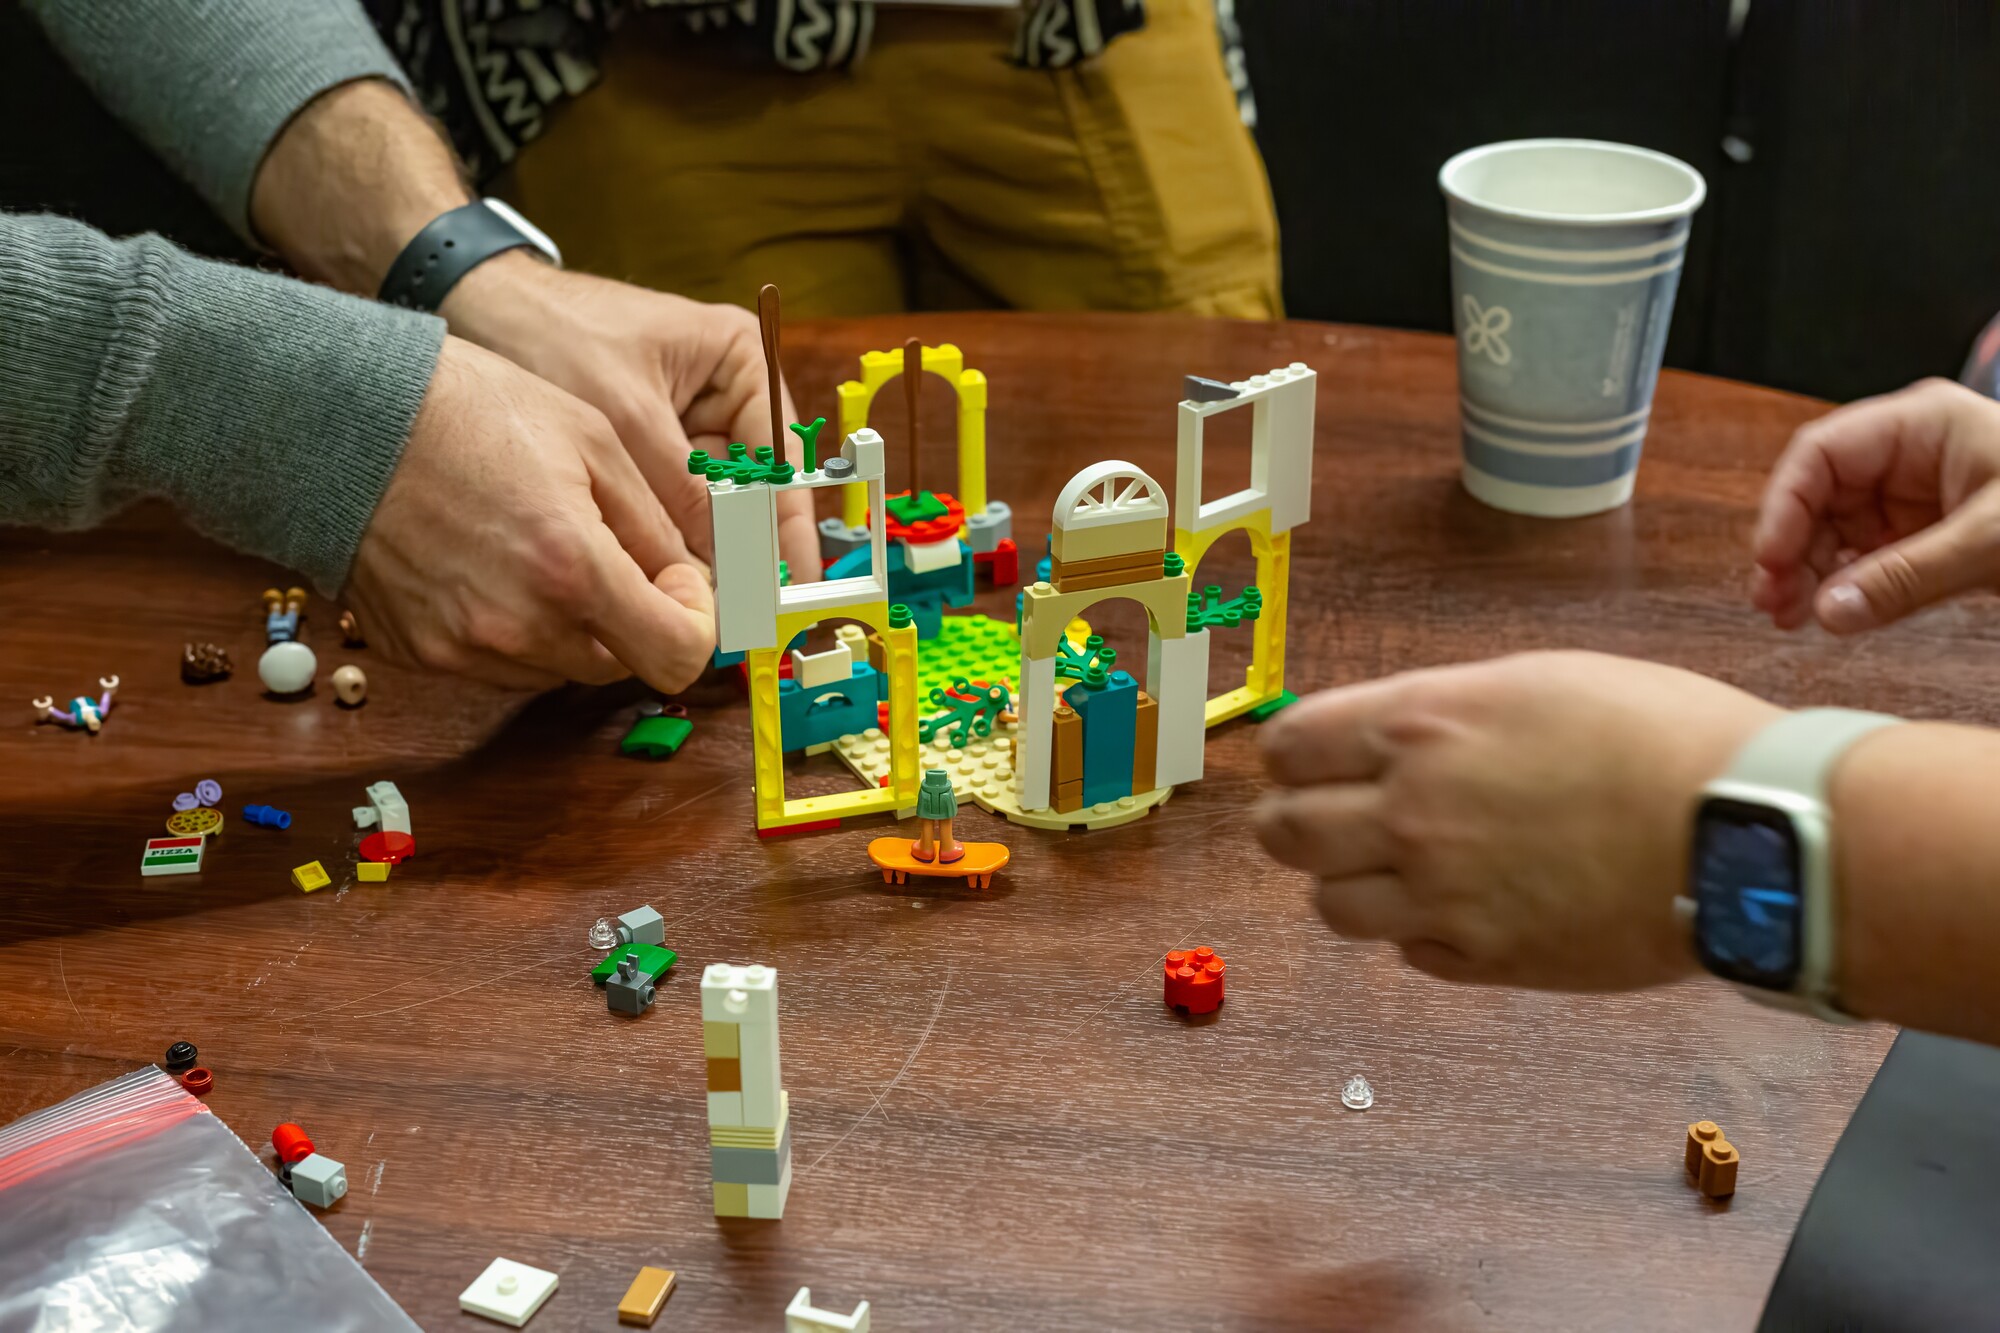 Colaboratorio participants build a LEGO set together.